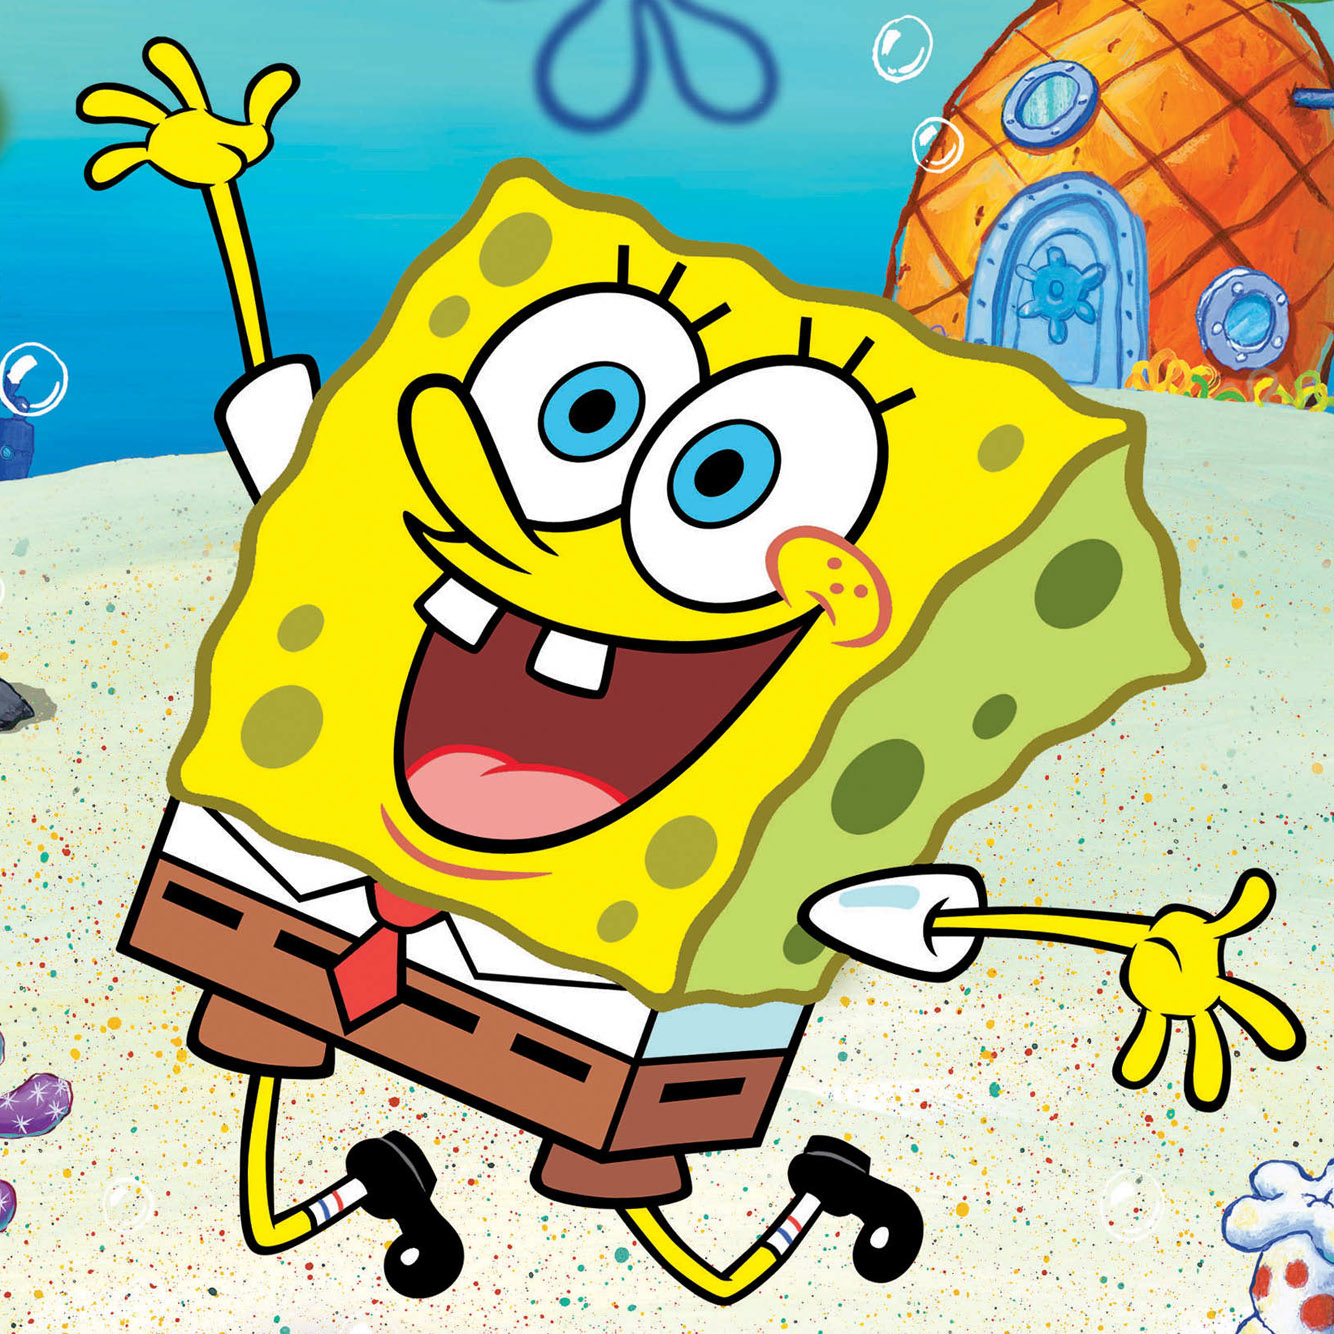 NickALive Nickelodeon Confirms That SpongeBob SquarePants Is NOT